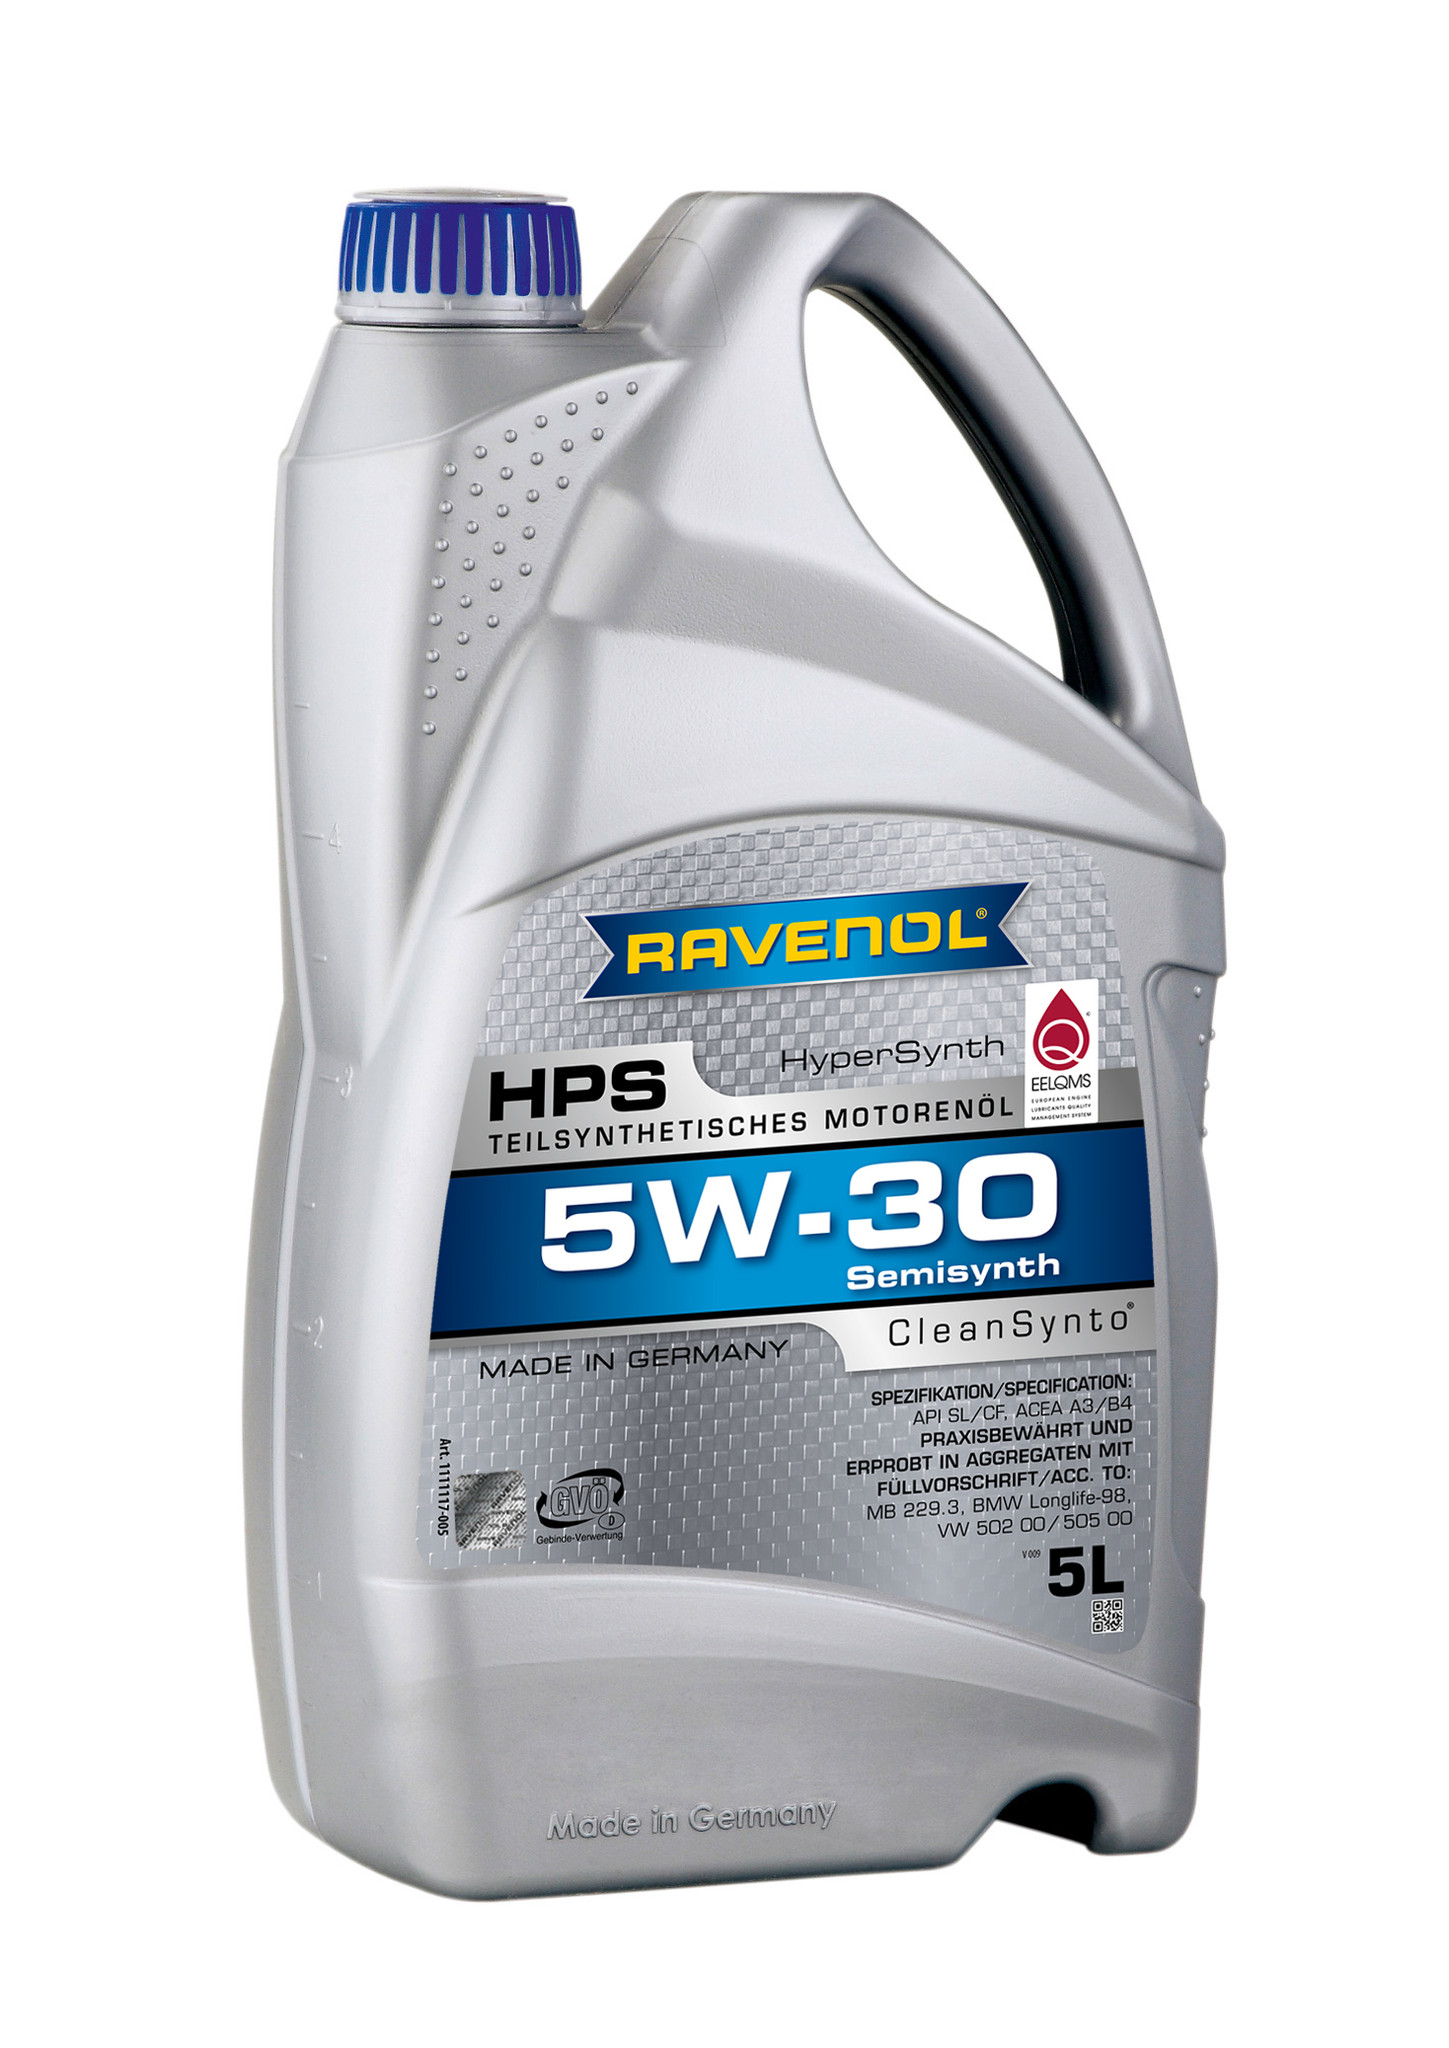 RAVENOL SVS 5w-40 High MILEAGE Motor Oil 5l, BMW Ll-01 Porsche A40 MB  229.5 for sale online